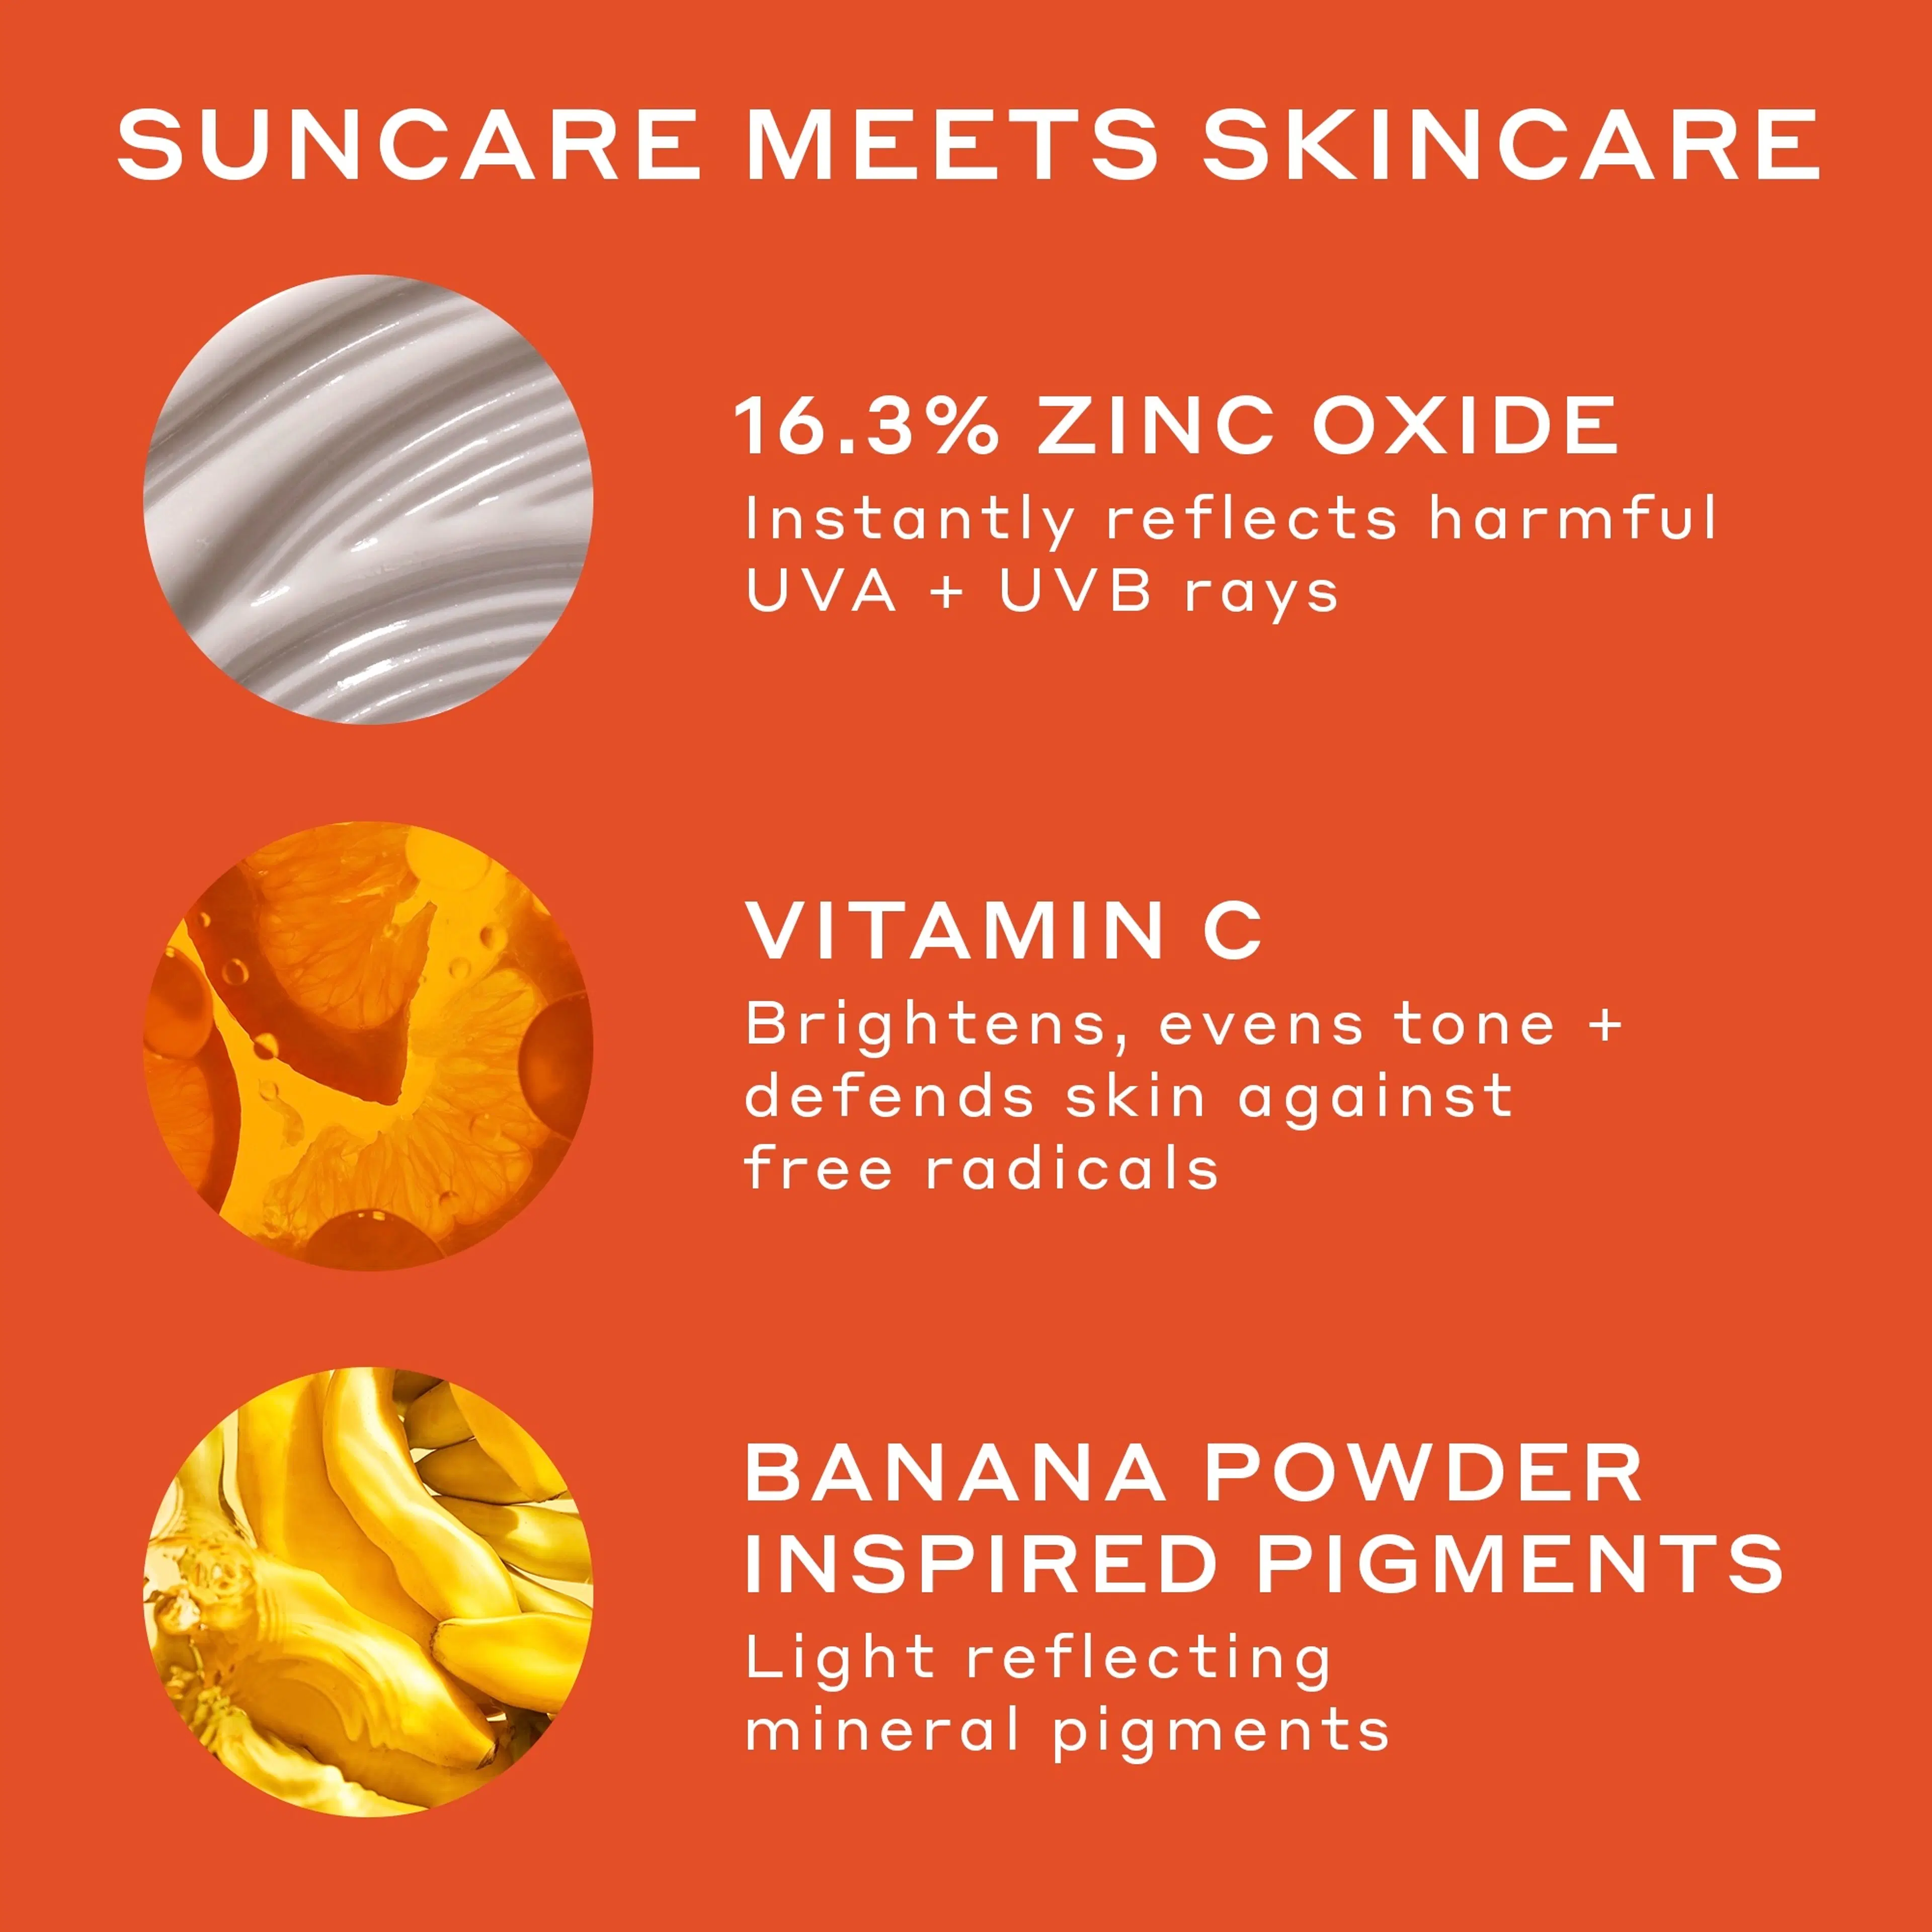 Ole Henriksen Banana Bright Mineral Sunscreen SPF30 aurinkovoide kasvoille 50 ml